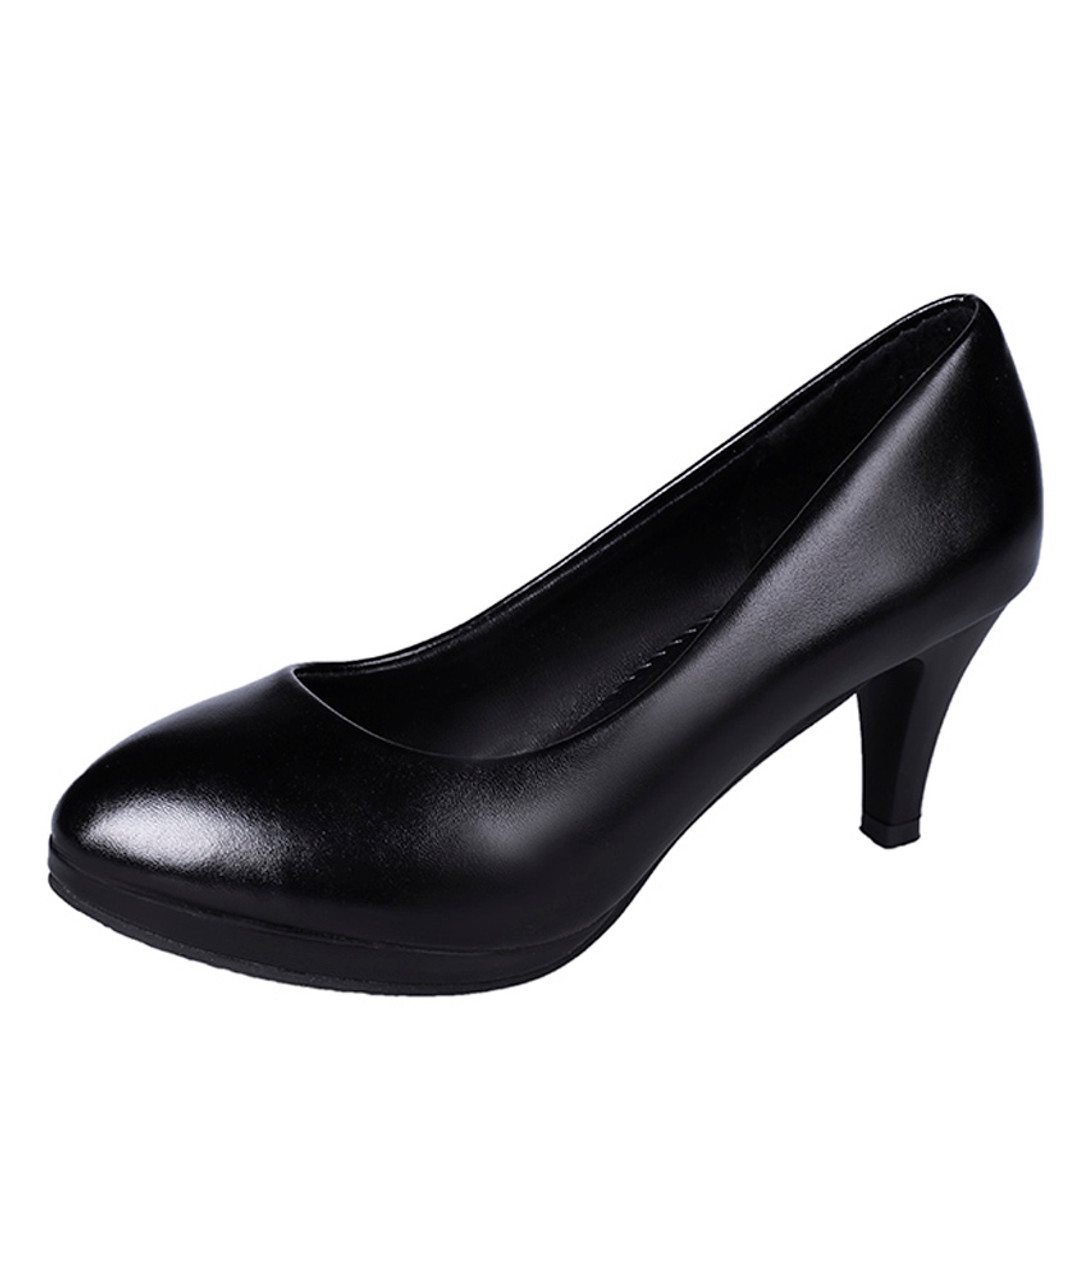 black court shoes round toe